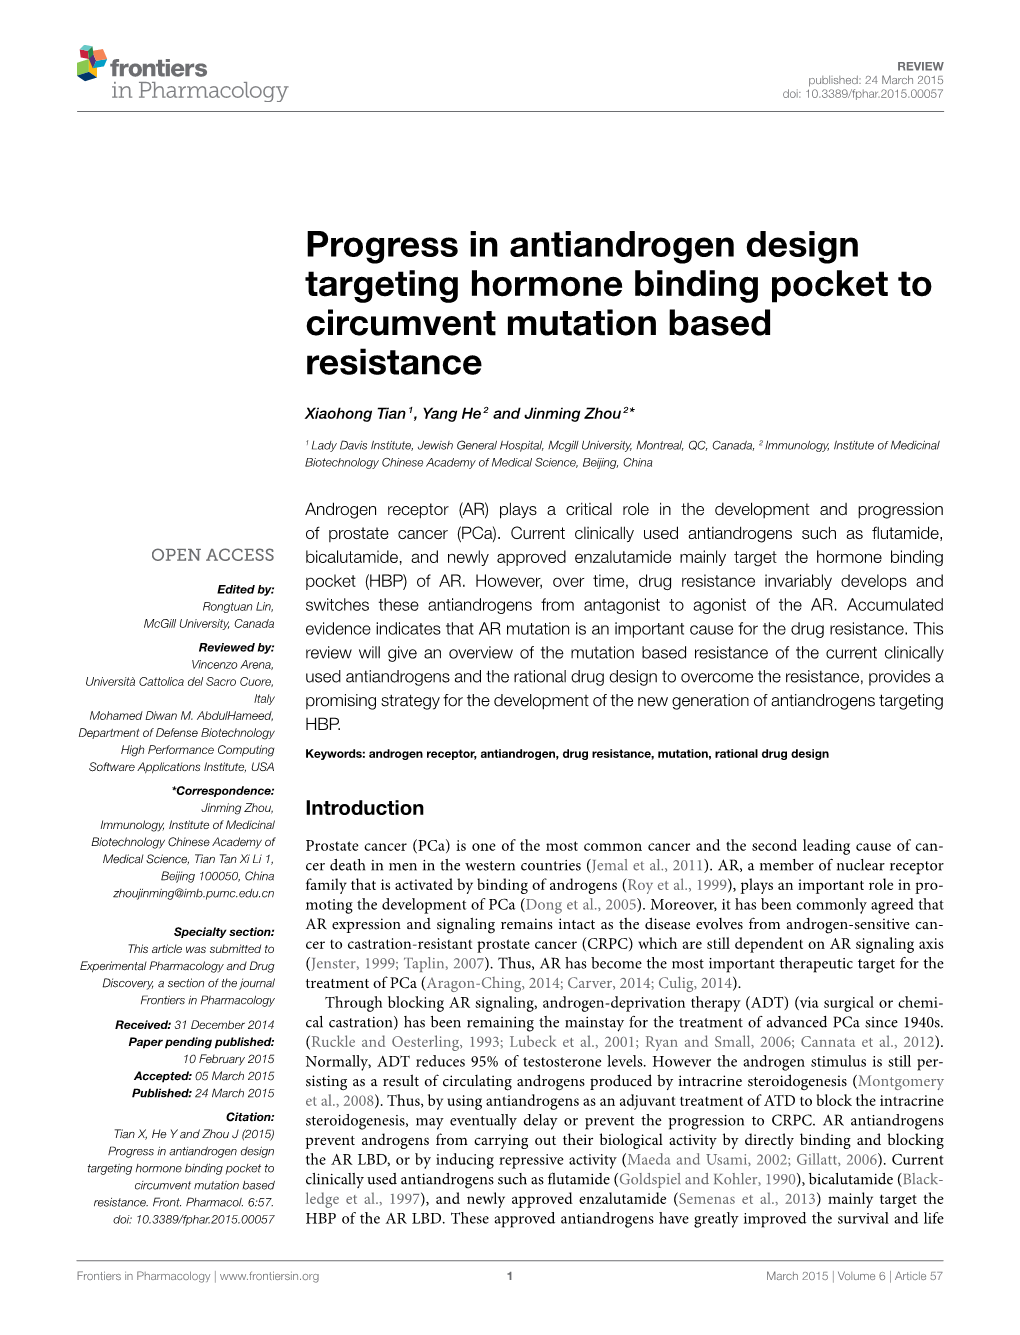 Progress in Antiandrogen Design Targeting Hormone Binding Pocket to Circumvent Mutation Based Resistance